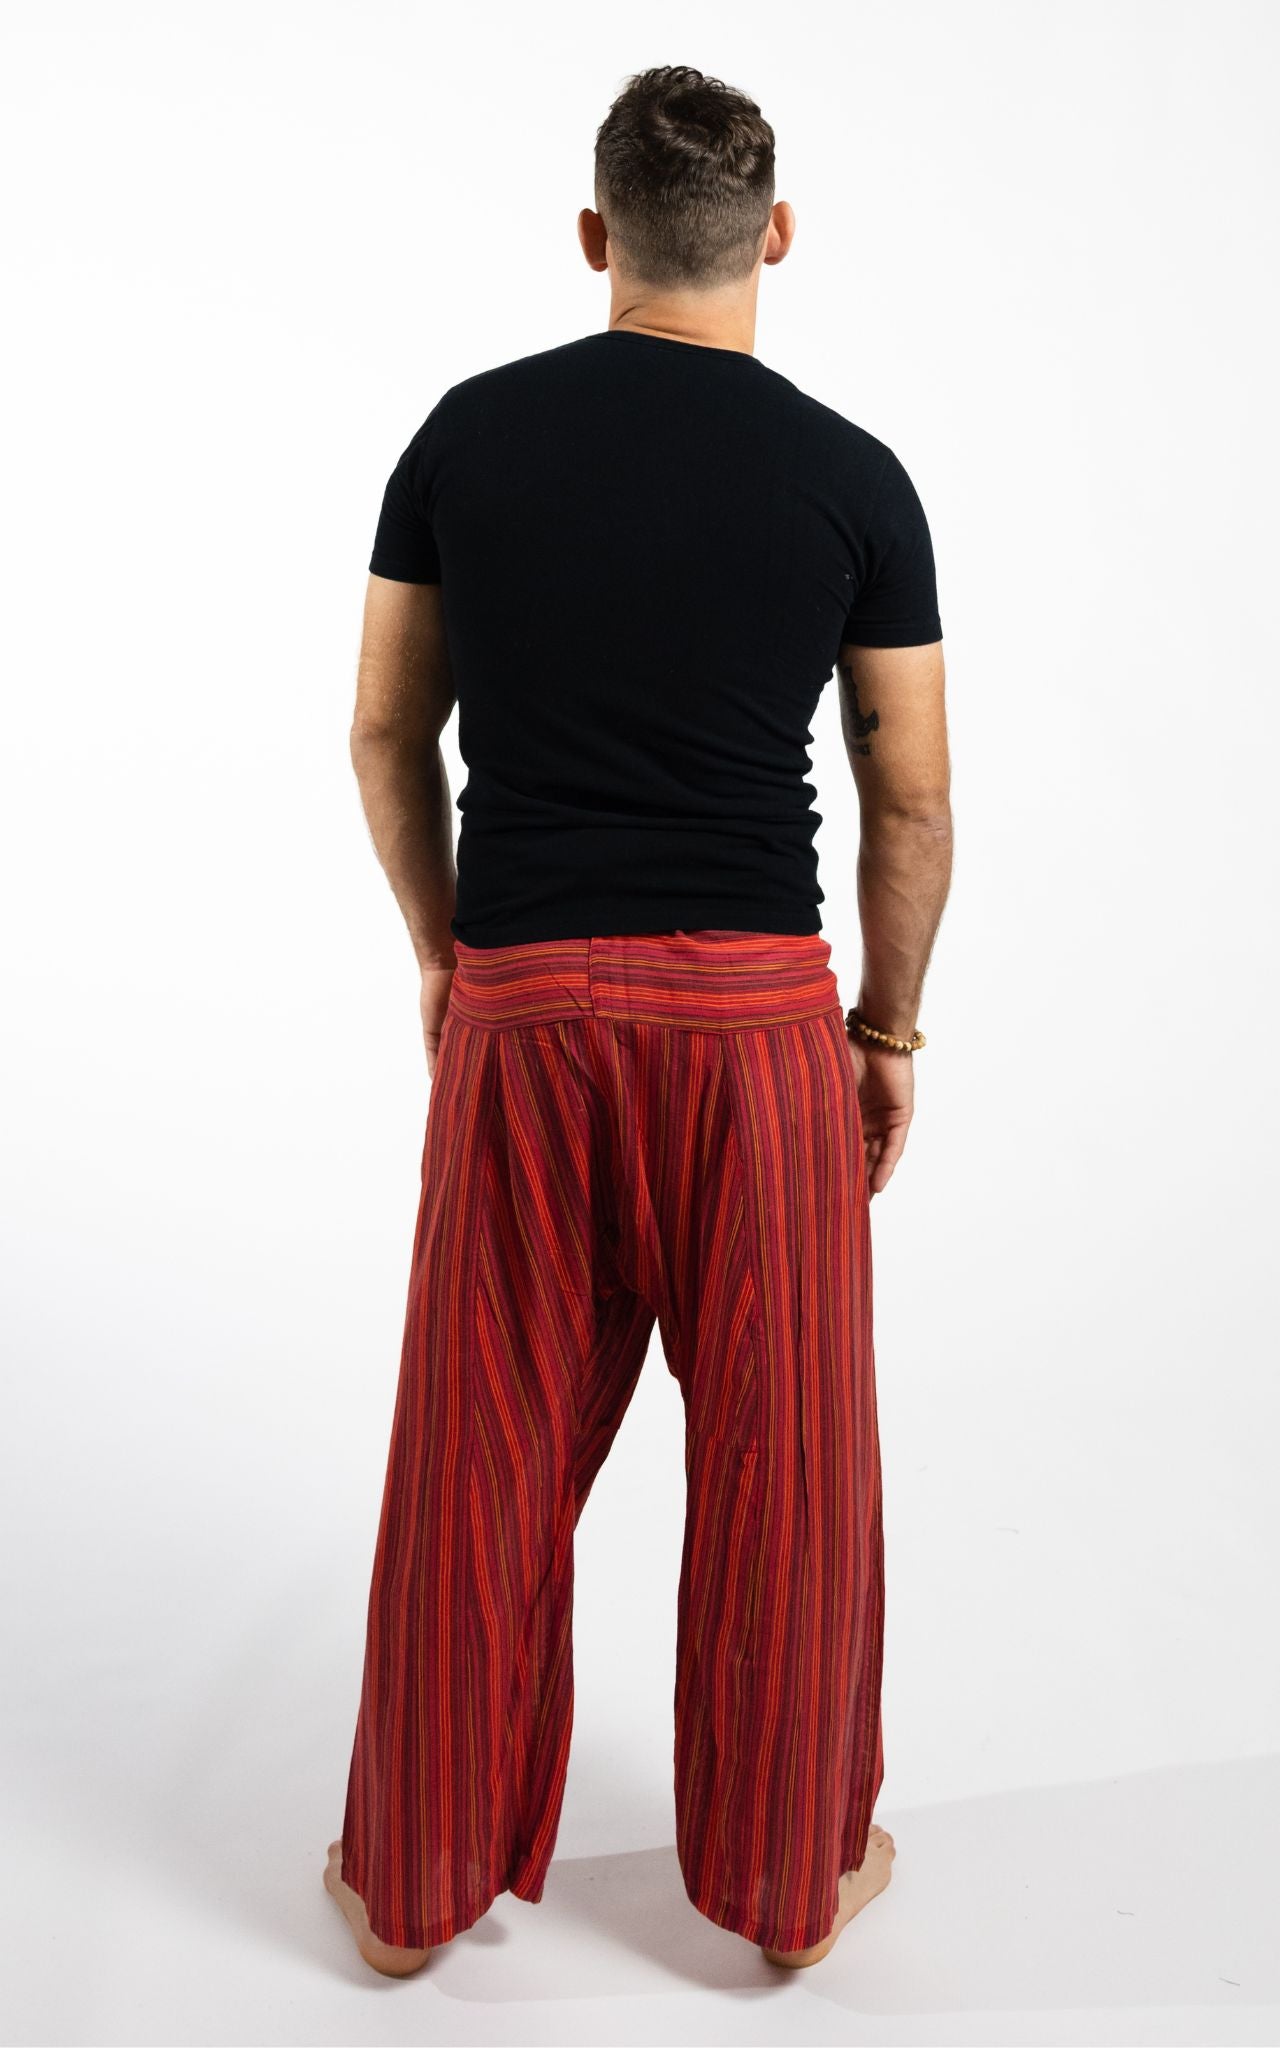 Surya Australia Cotton Thai Fisherman Pants from Nepal (Striped Cotton) - Red